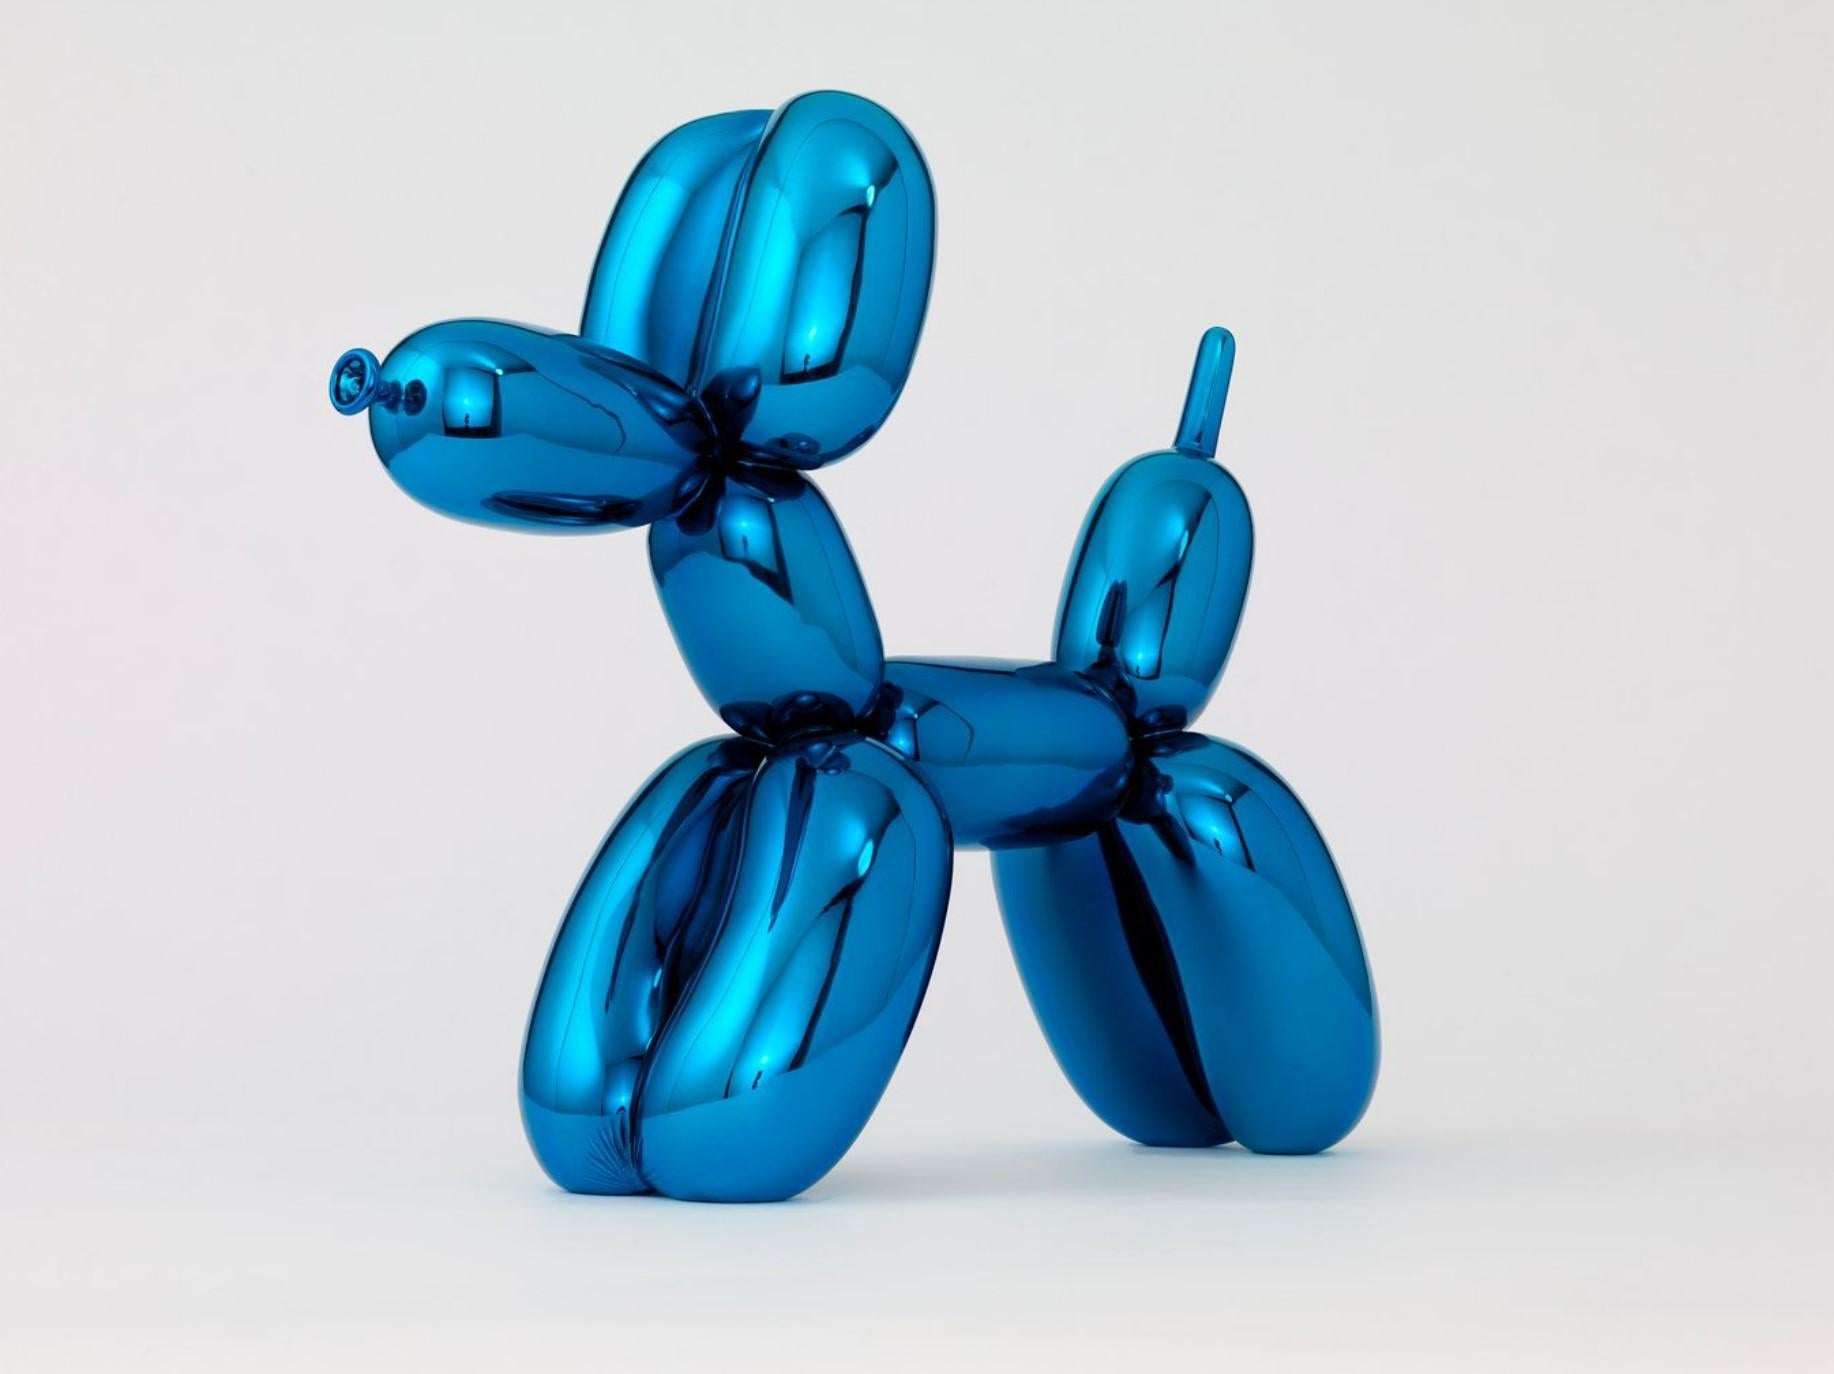 Ballon Dog Blue - Sculpture by Jeff Koons